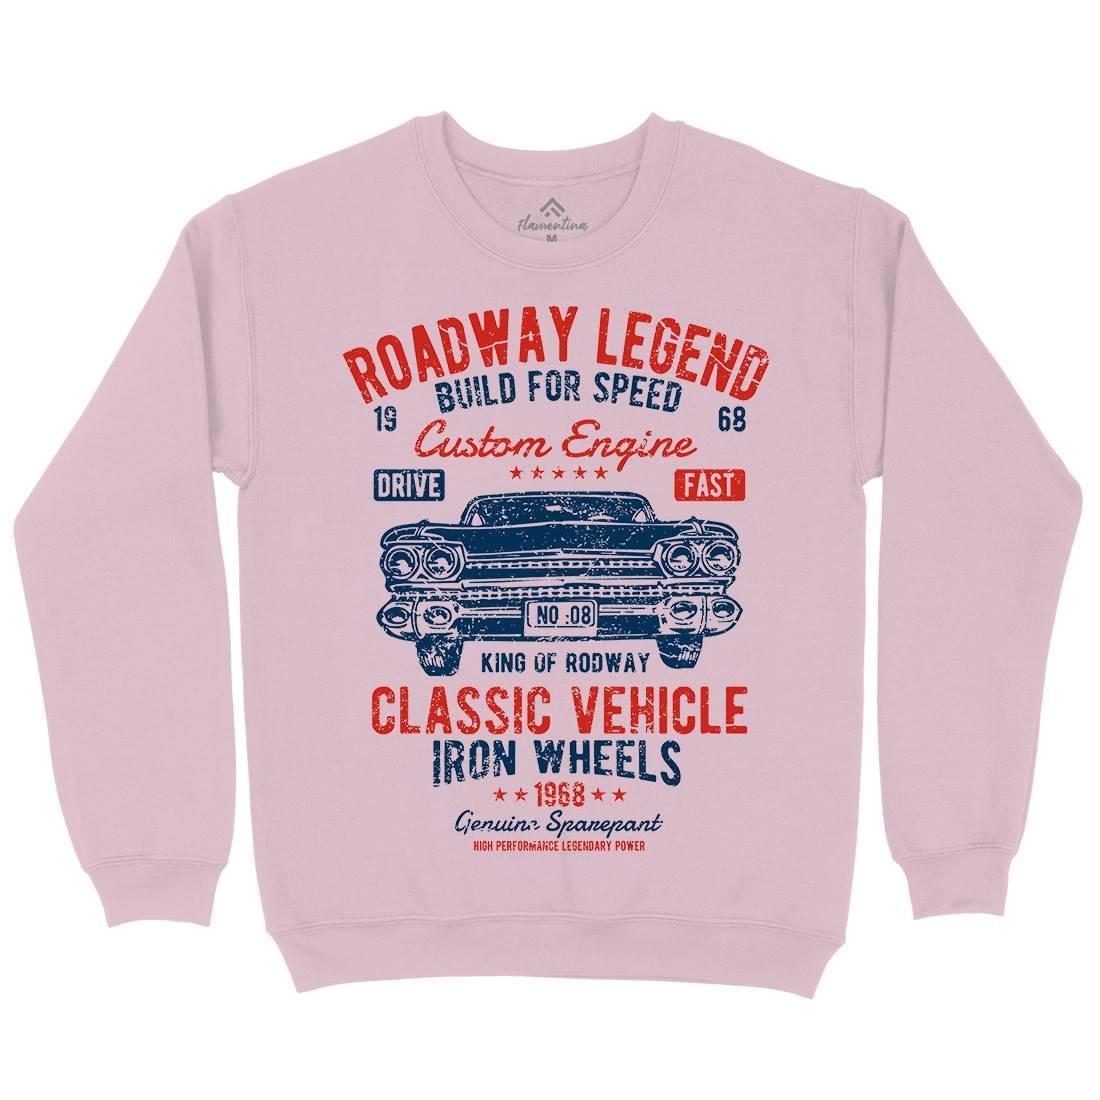 Roadway Legend Kids Crew Neck Sweatshirt Cars A125